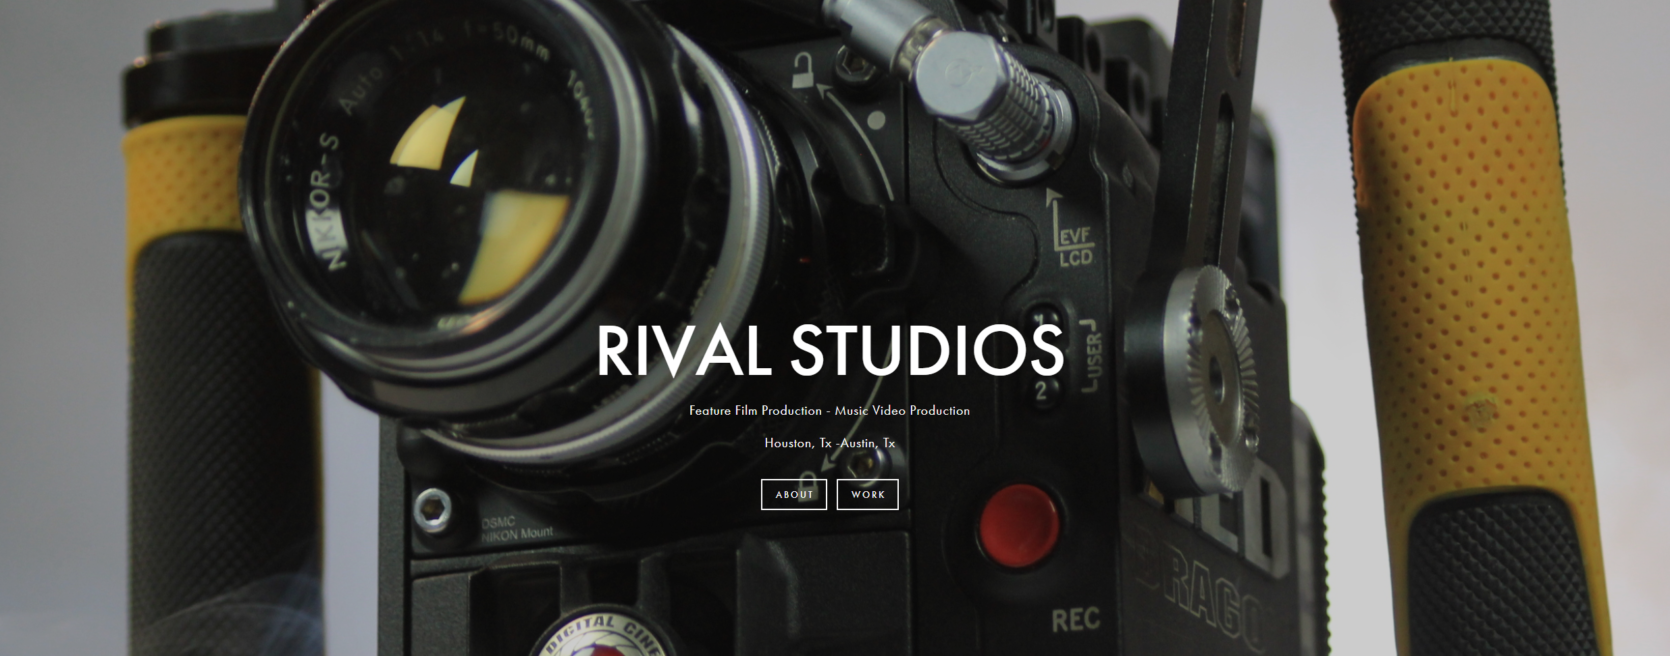 rival studios